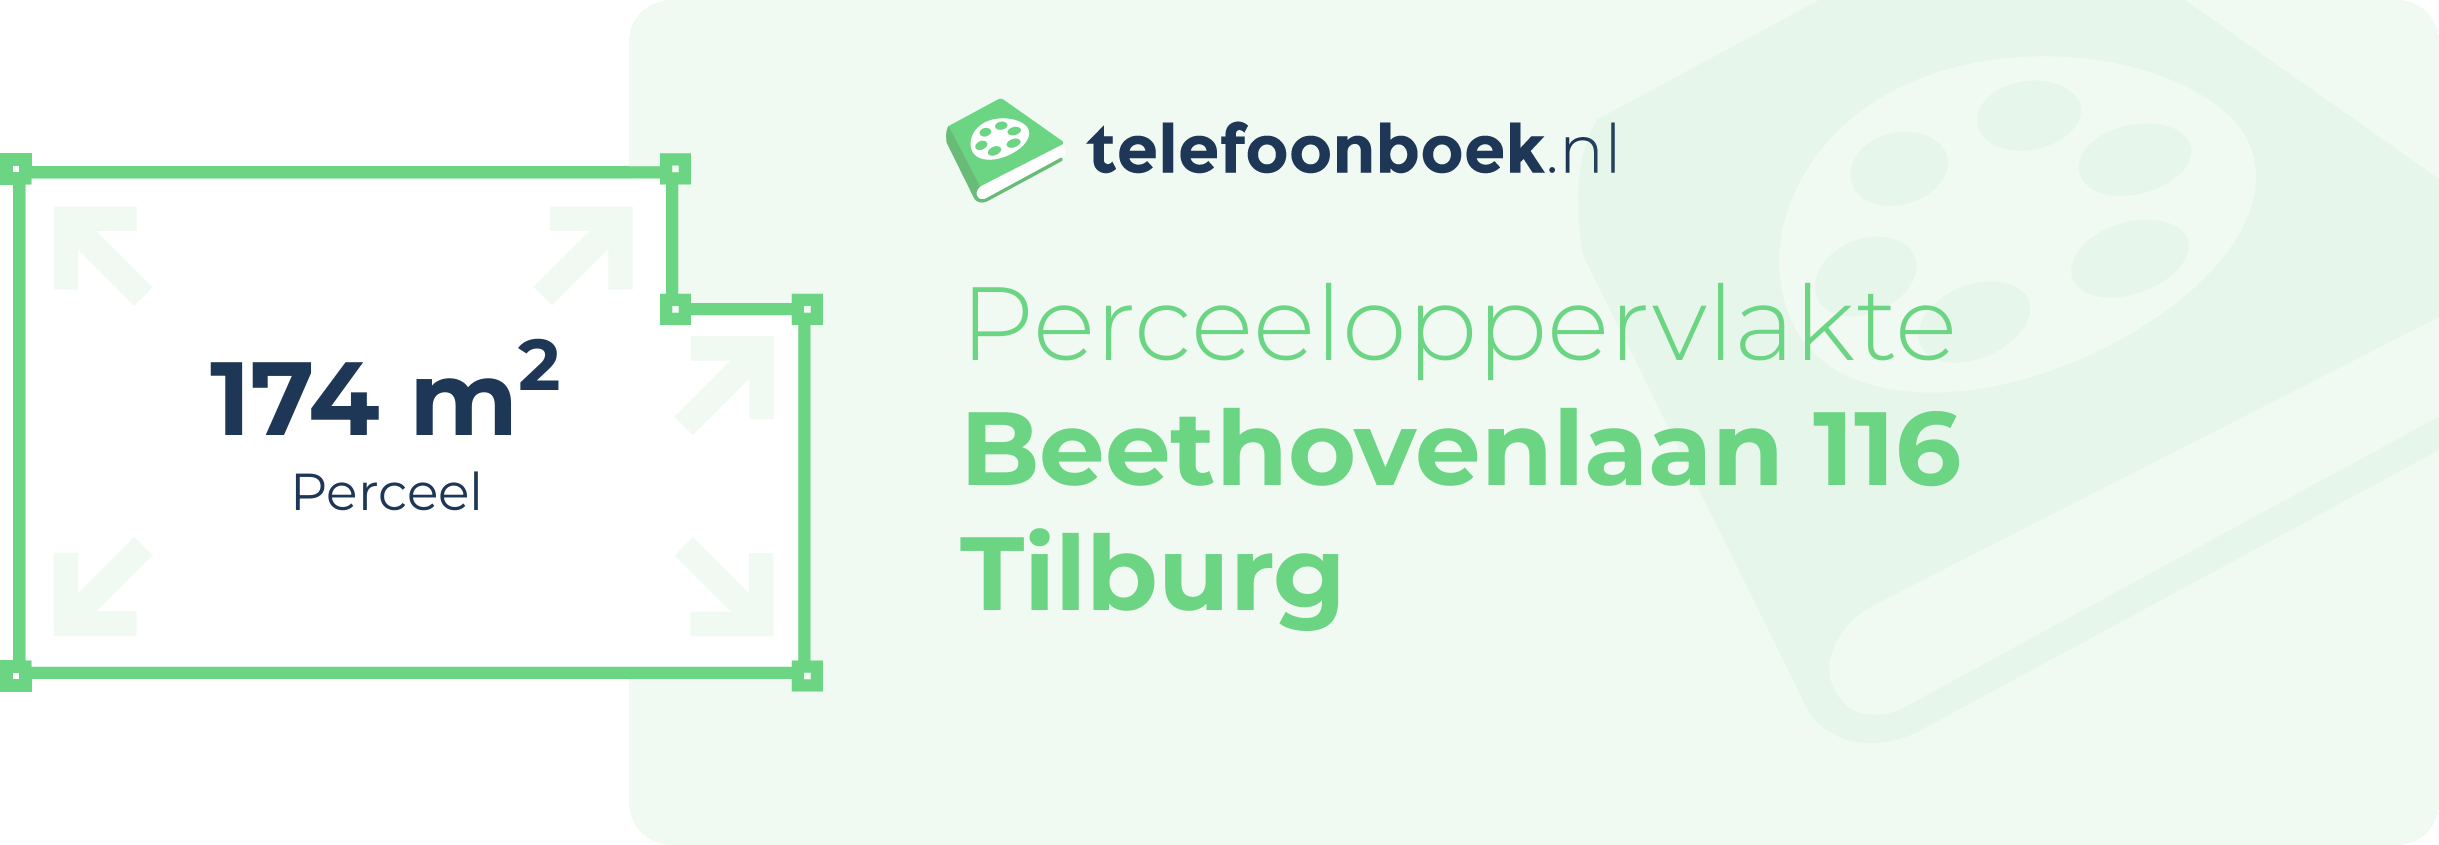 Perceeloppervlakte Beethovenlaan 116 Tilburg